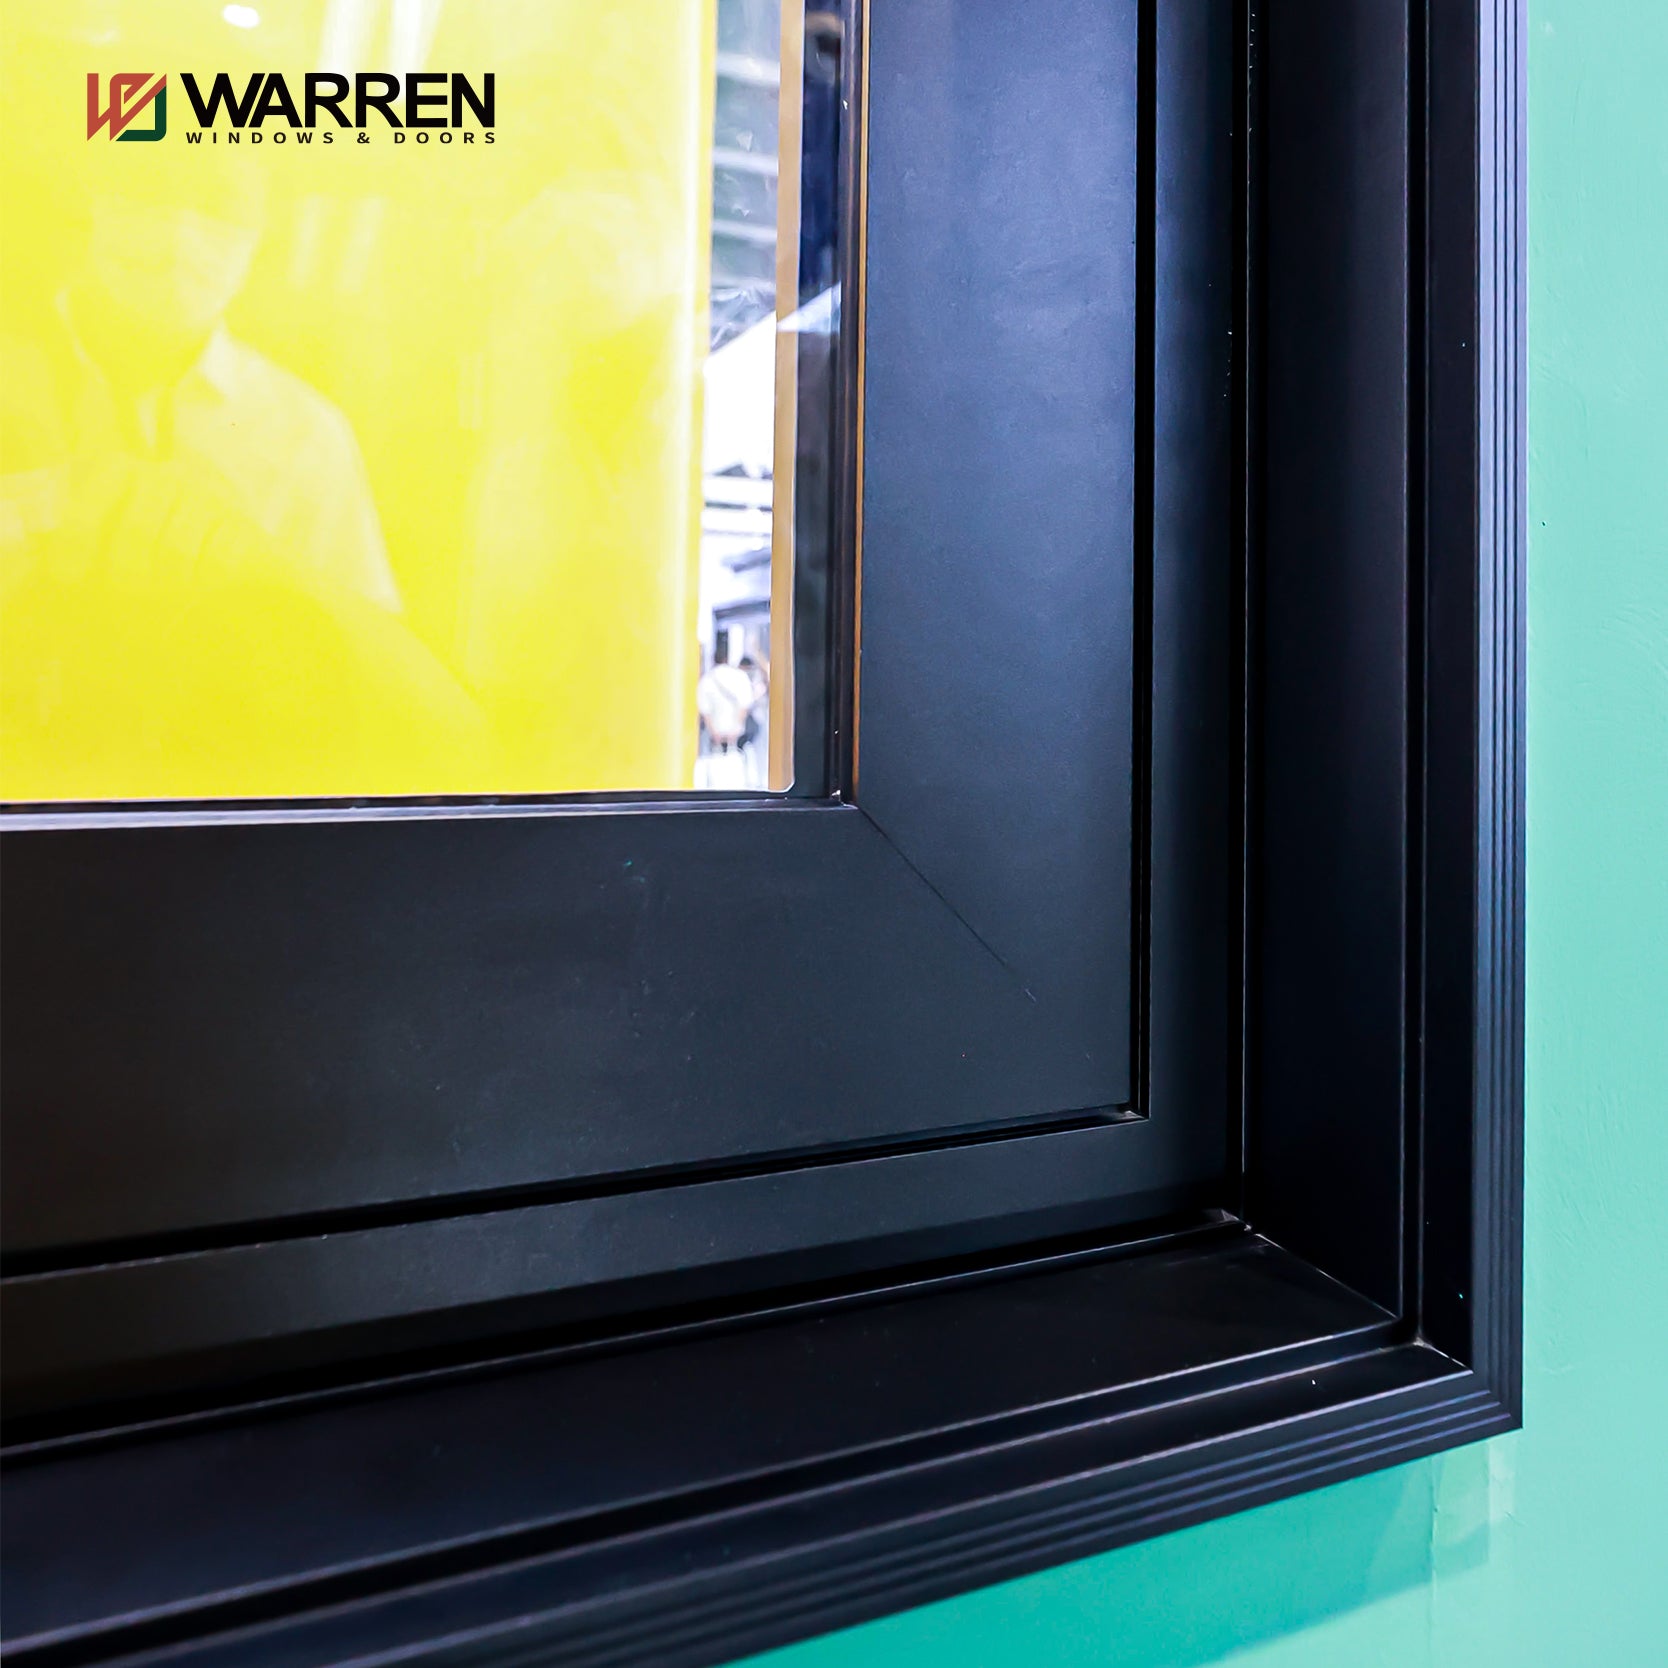 Warren New Model Customized Aluminum Alloy Glass Casement Window Horizontal Pivoted Hung Design Window